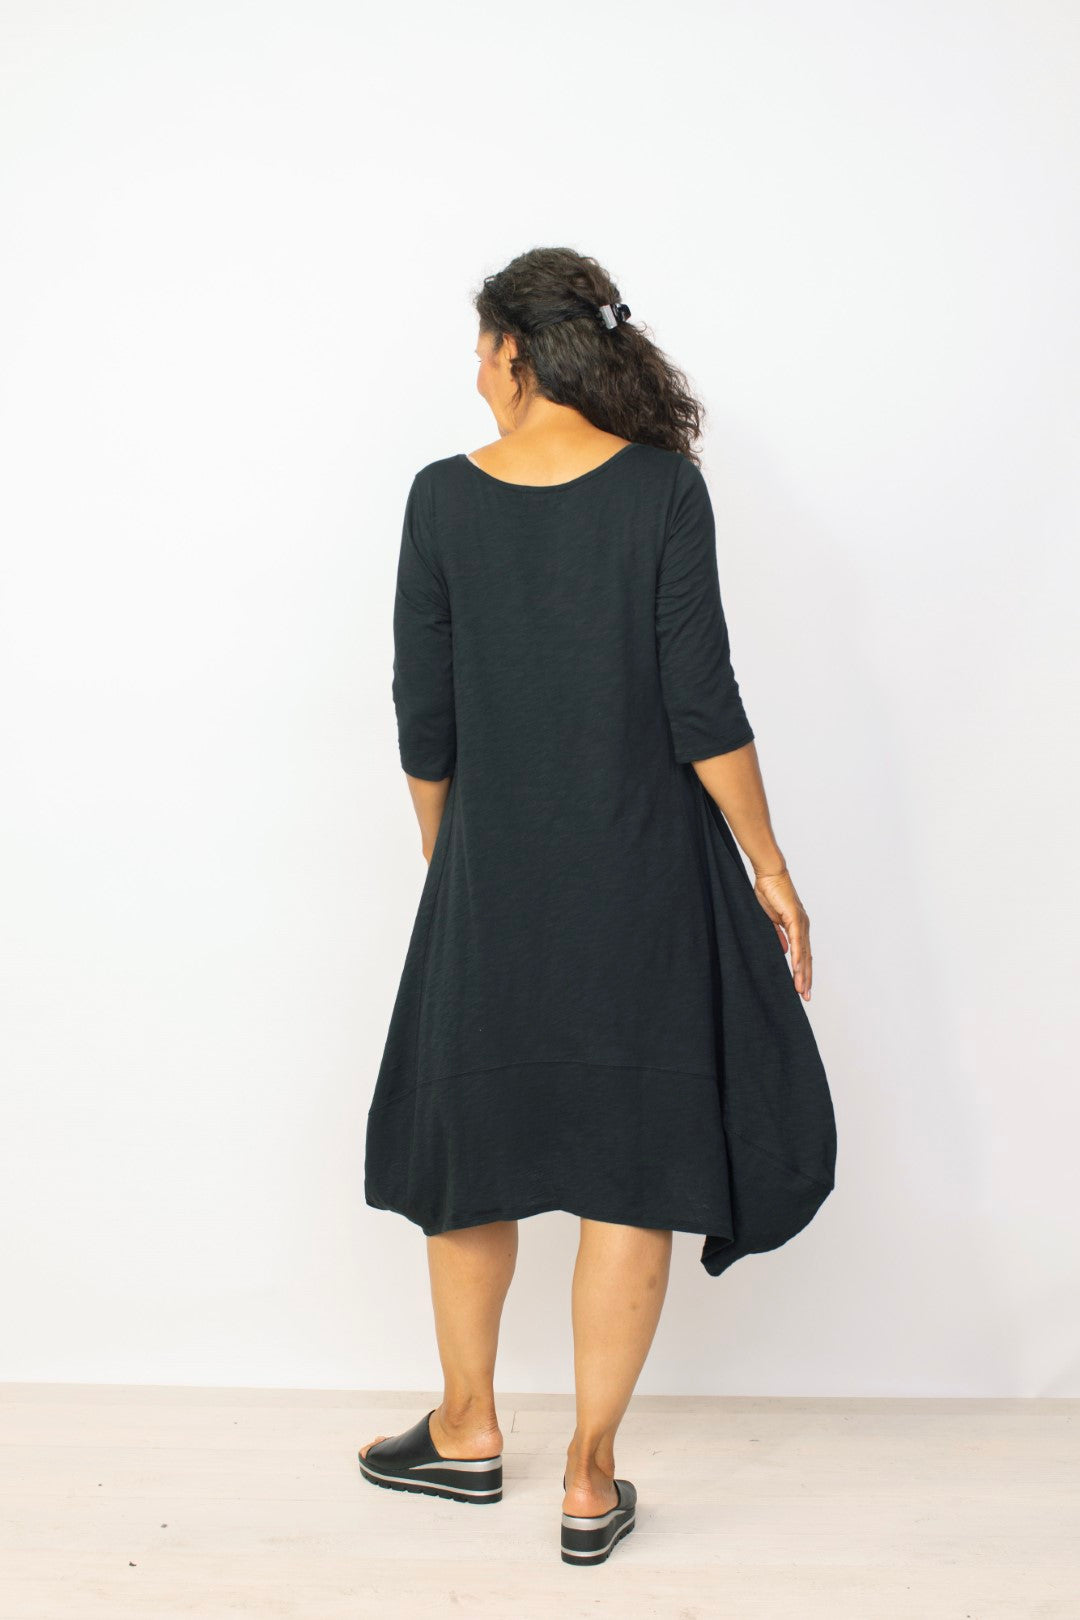 Cotton Artist Dress in Black by Habitat Clothing